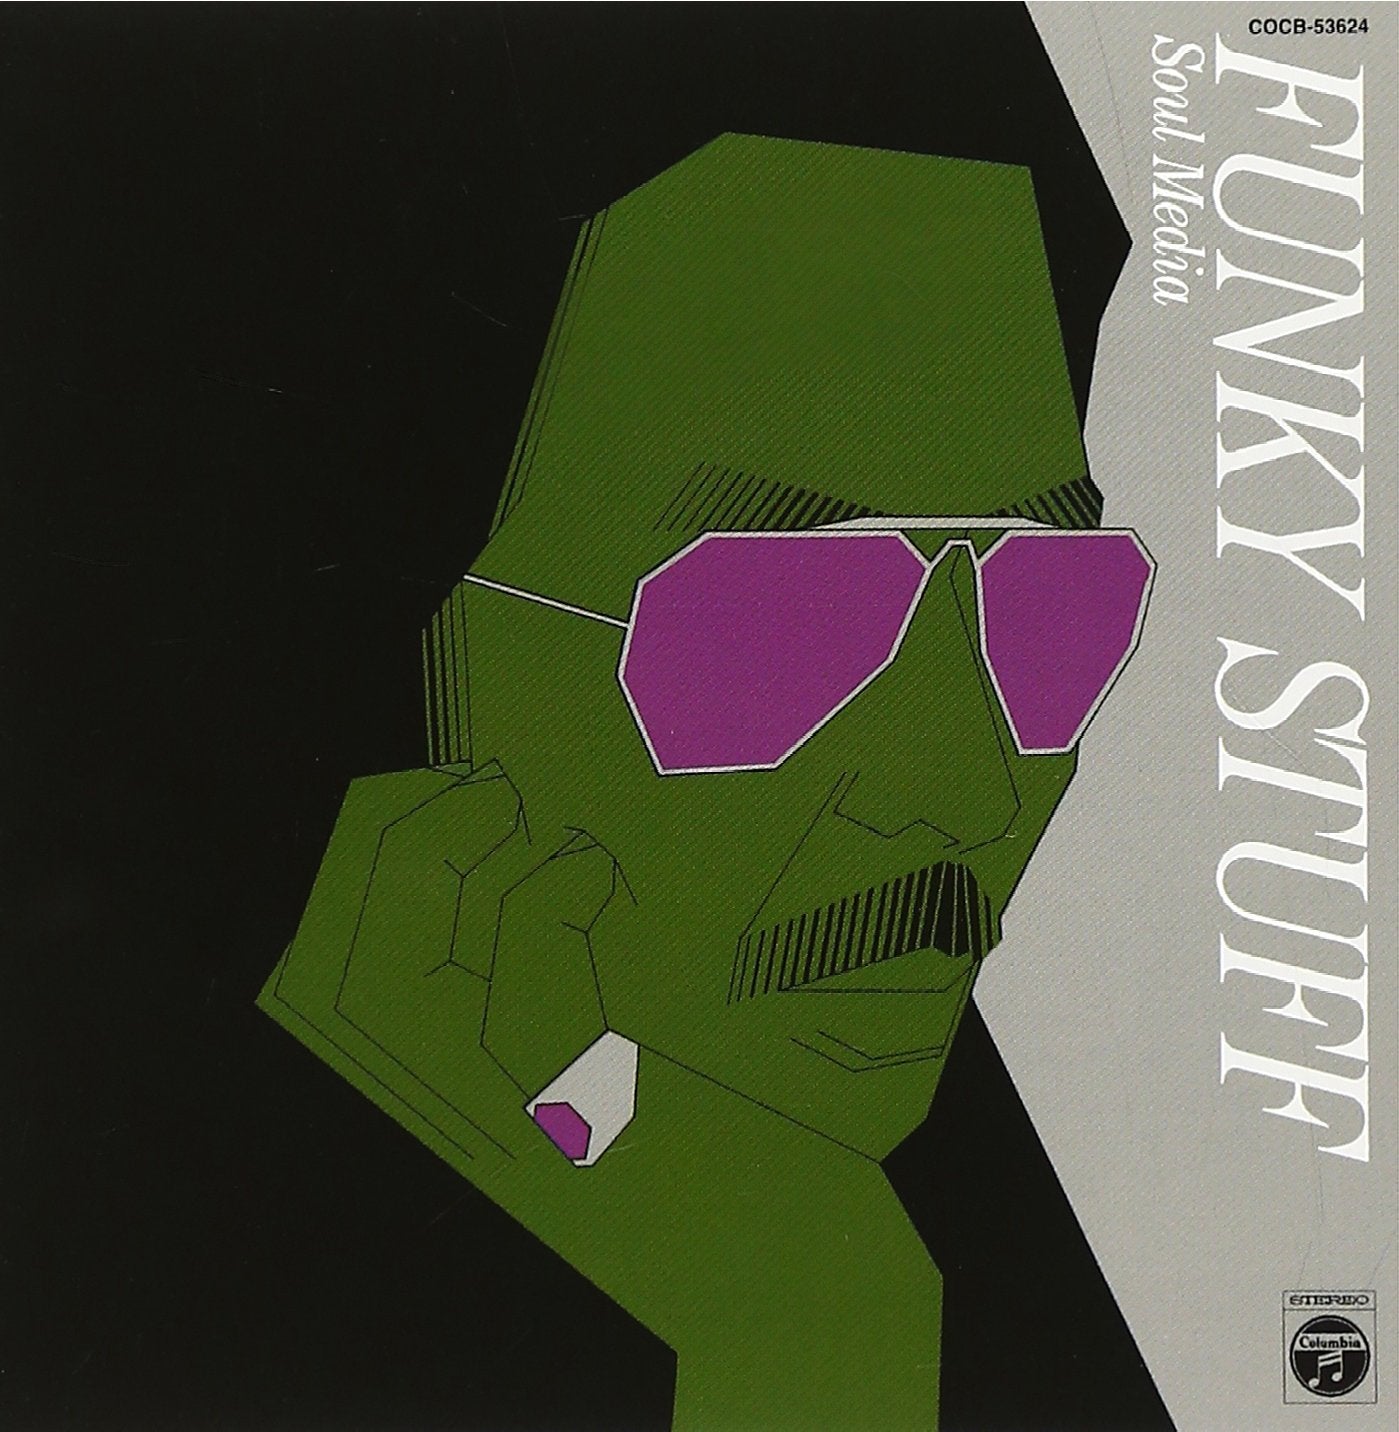 HMJY-102 - Jiro Inagaki & Soul Media - Funky Stuff